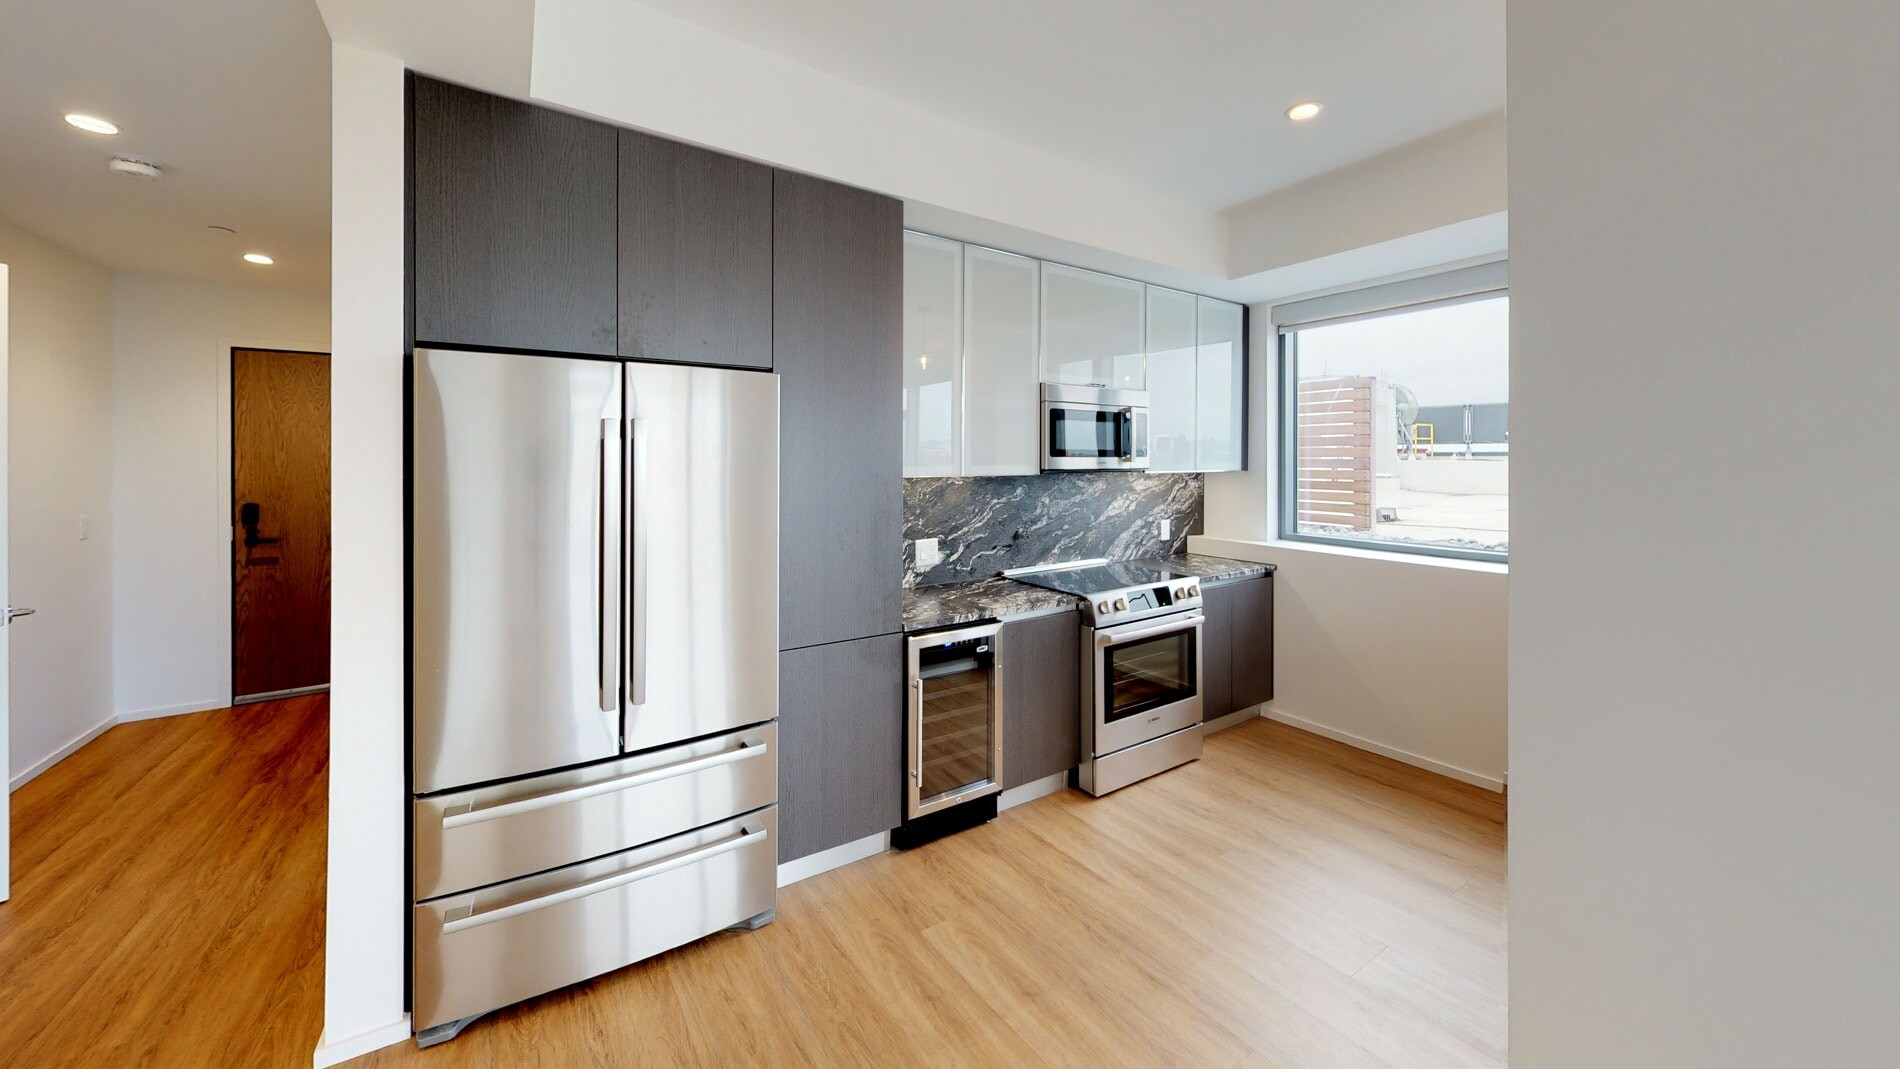 Photos of apartment on Milford St.,Boston MA 02118